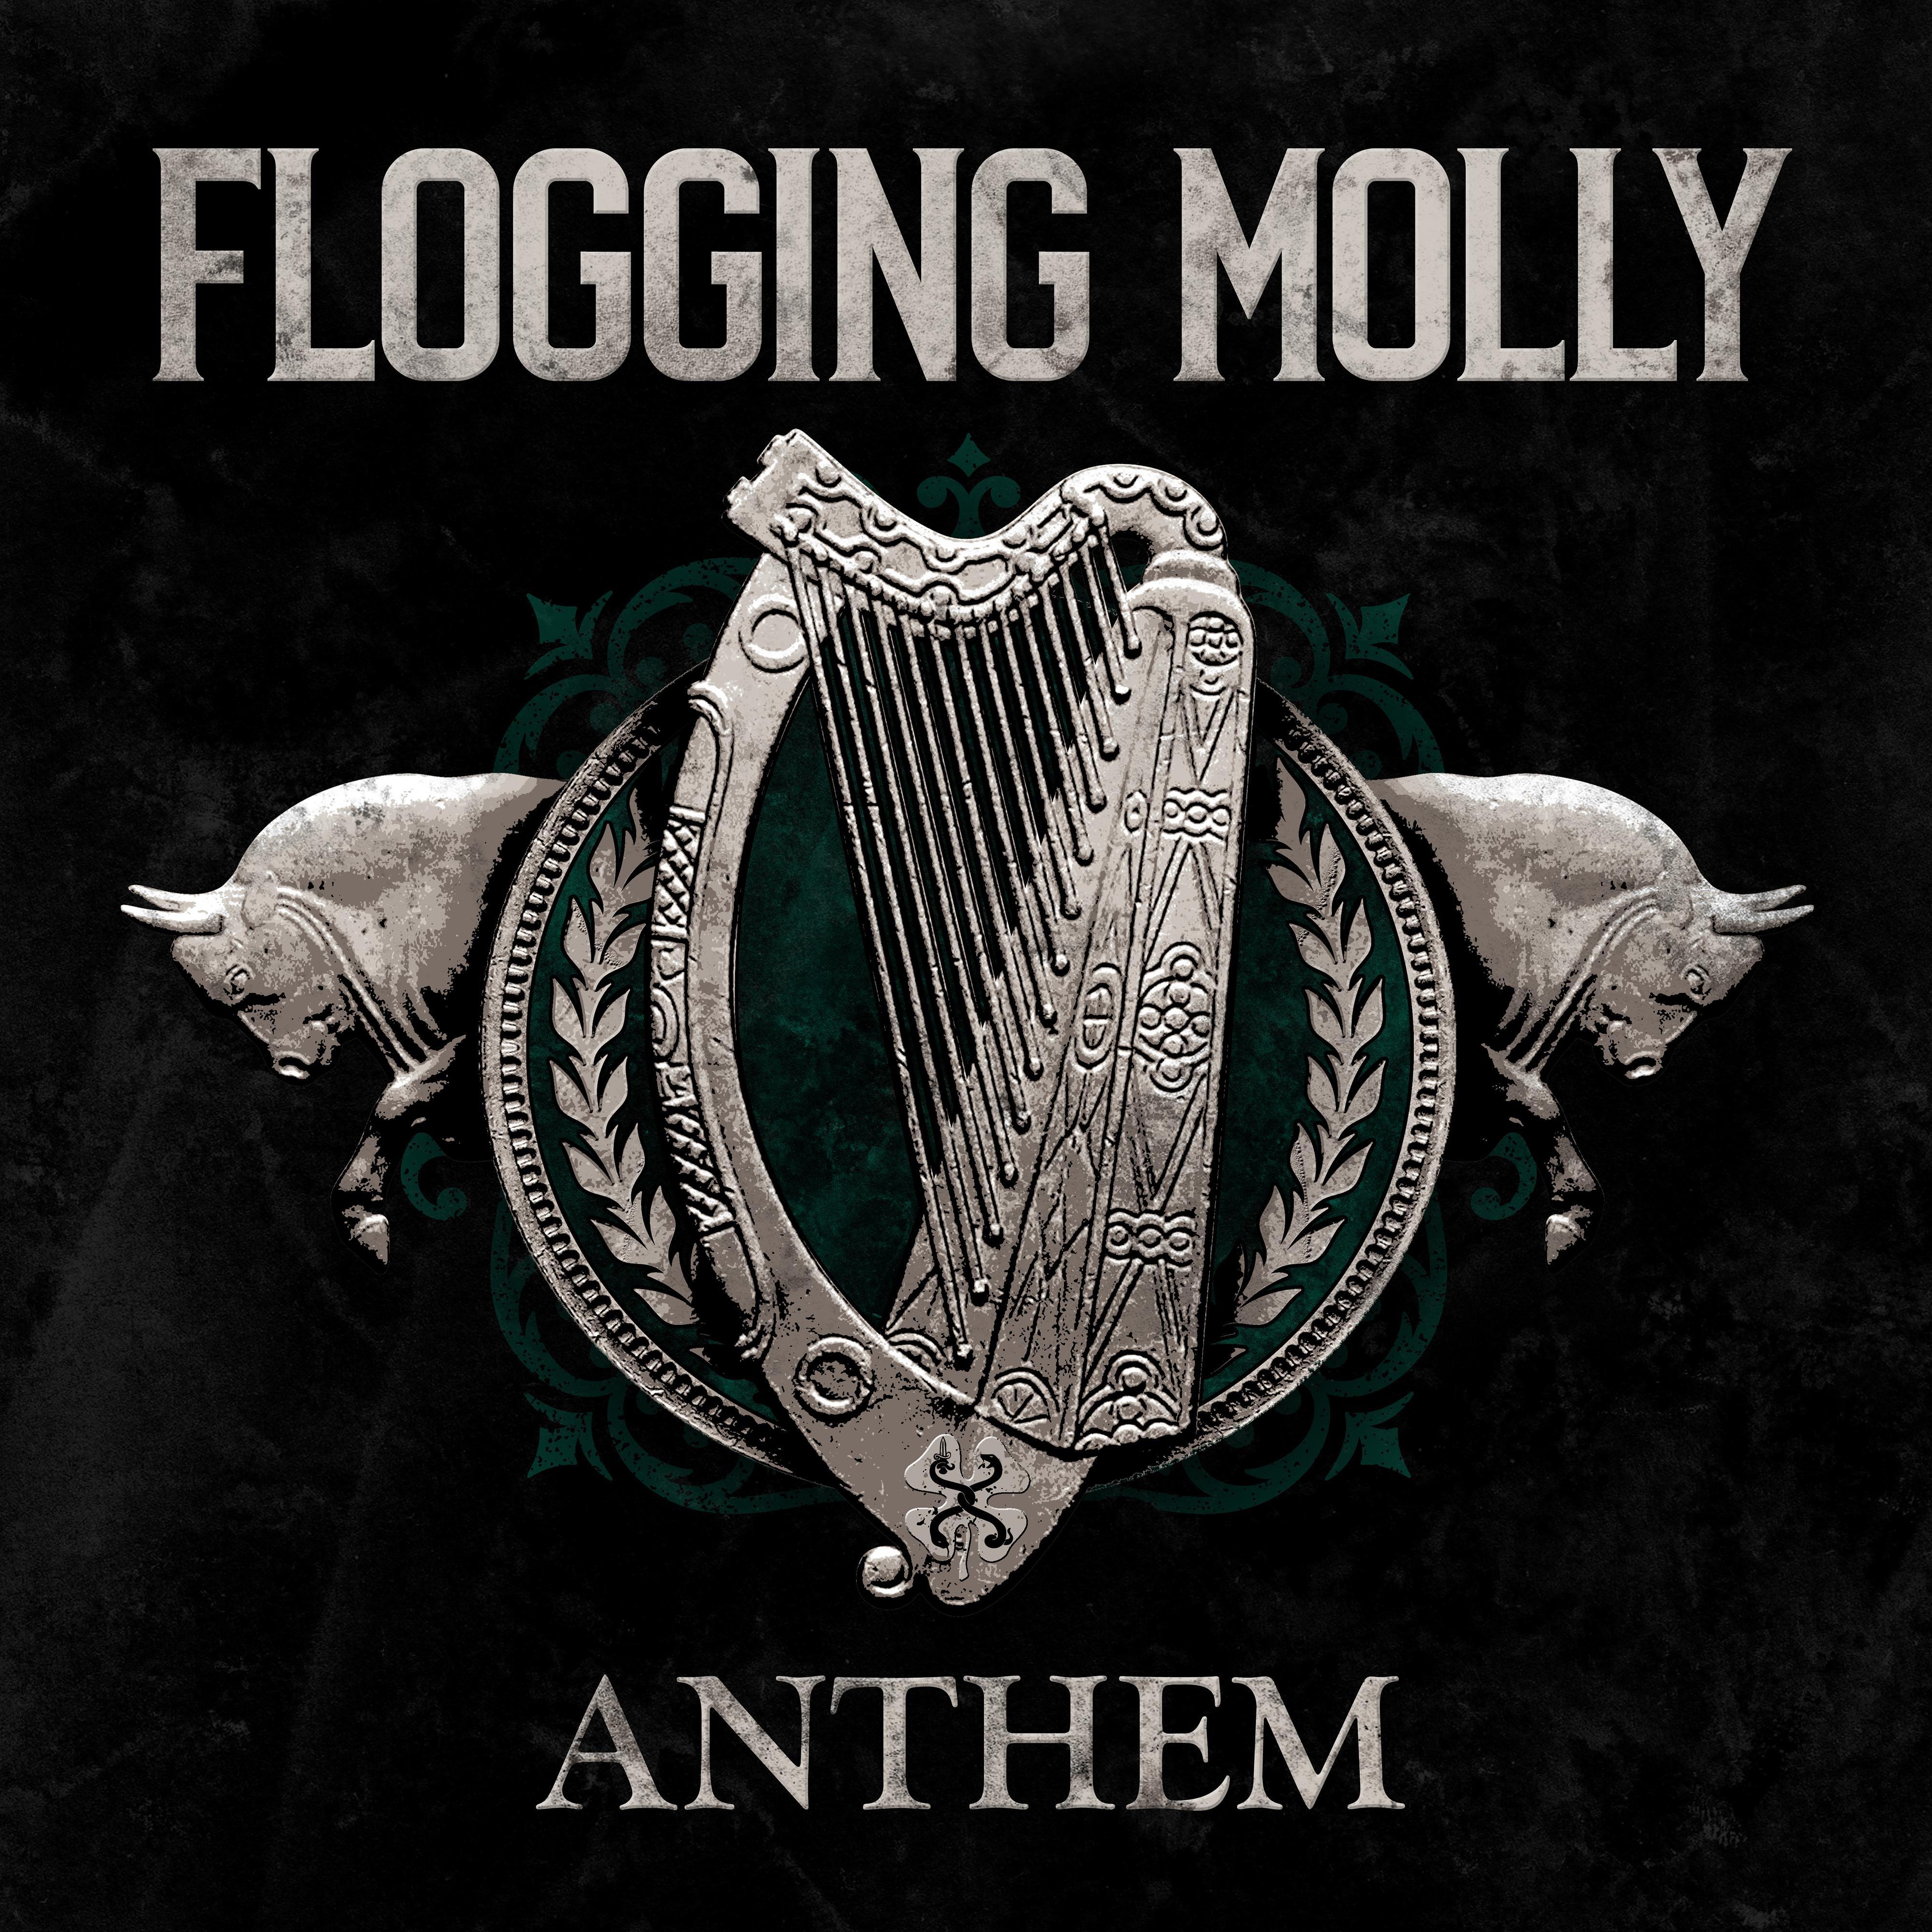 Flogging Molly - Lead The Way